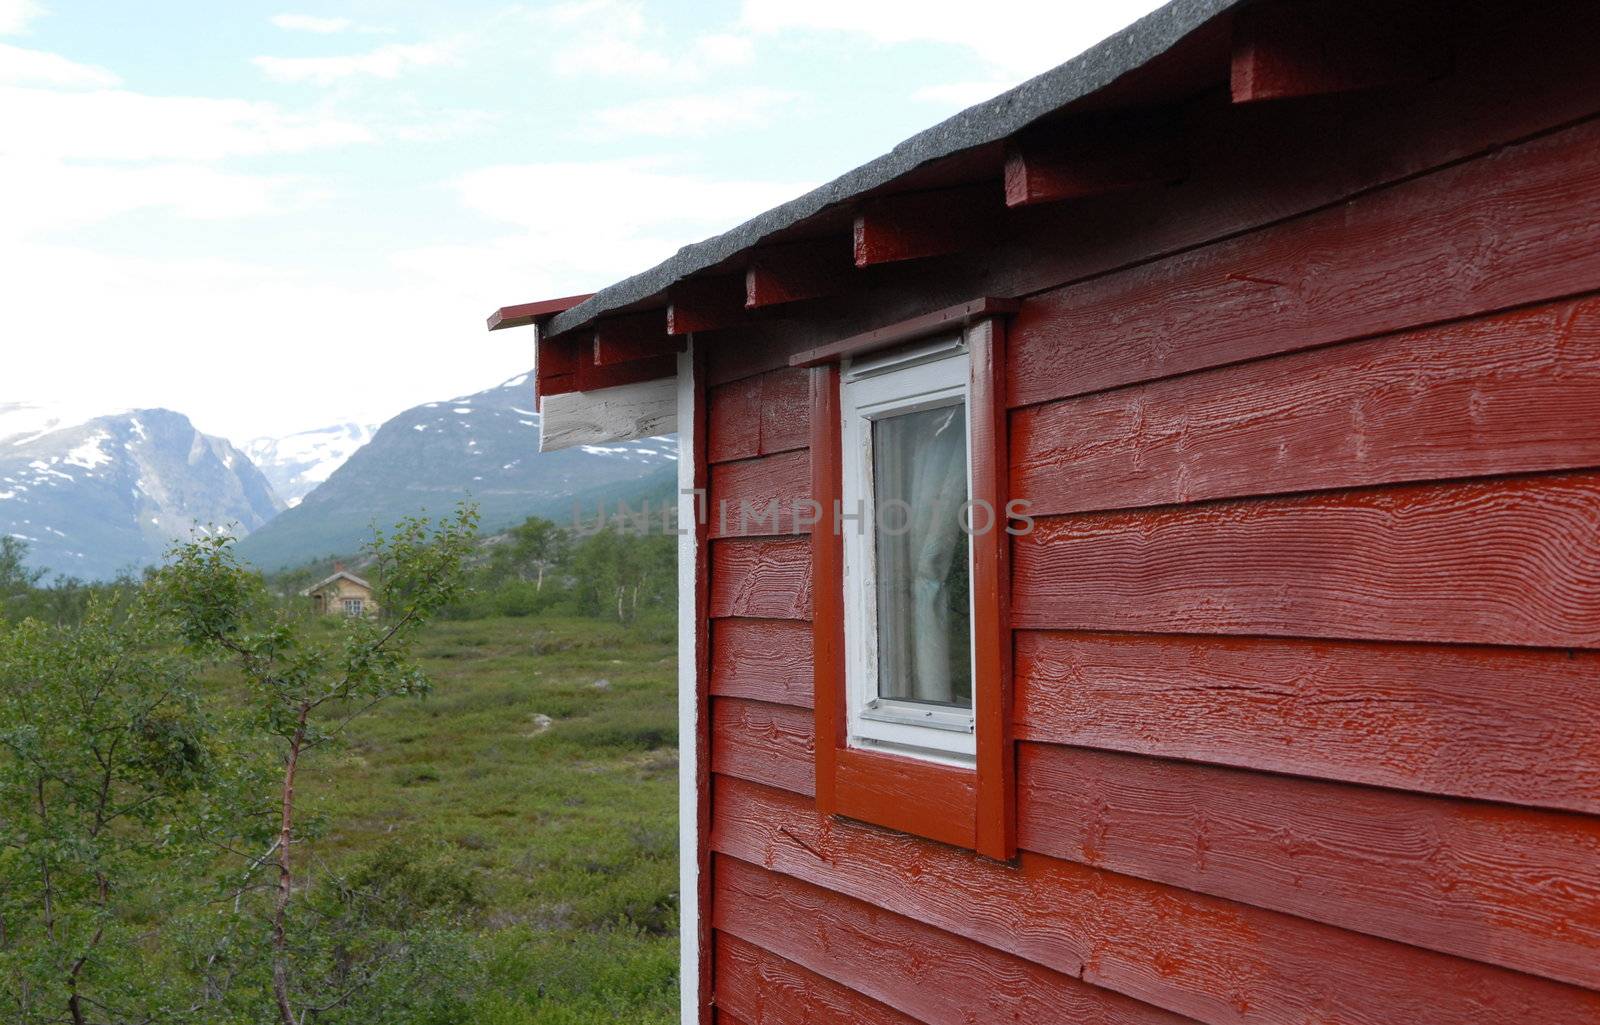 Small Norwegian cabin by Bildehagen